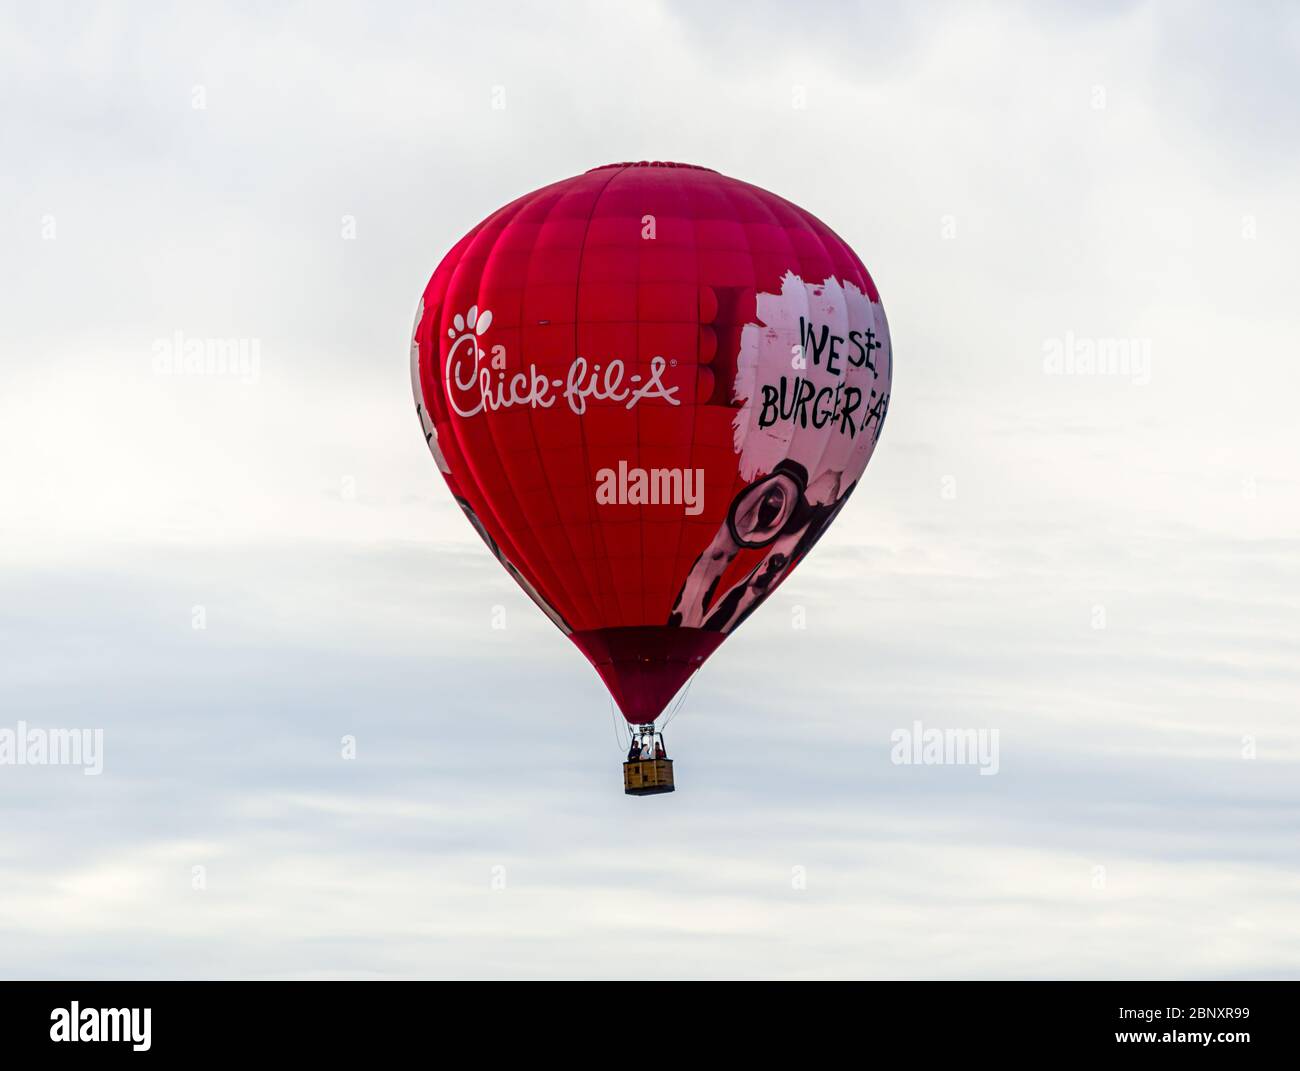 2019 Barrett-Jackson Scottsdale Auction, Chick-fil-A Hot Air Balloon Foto Stock